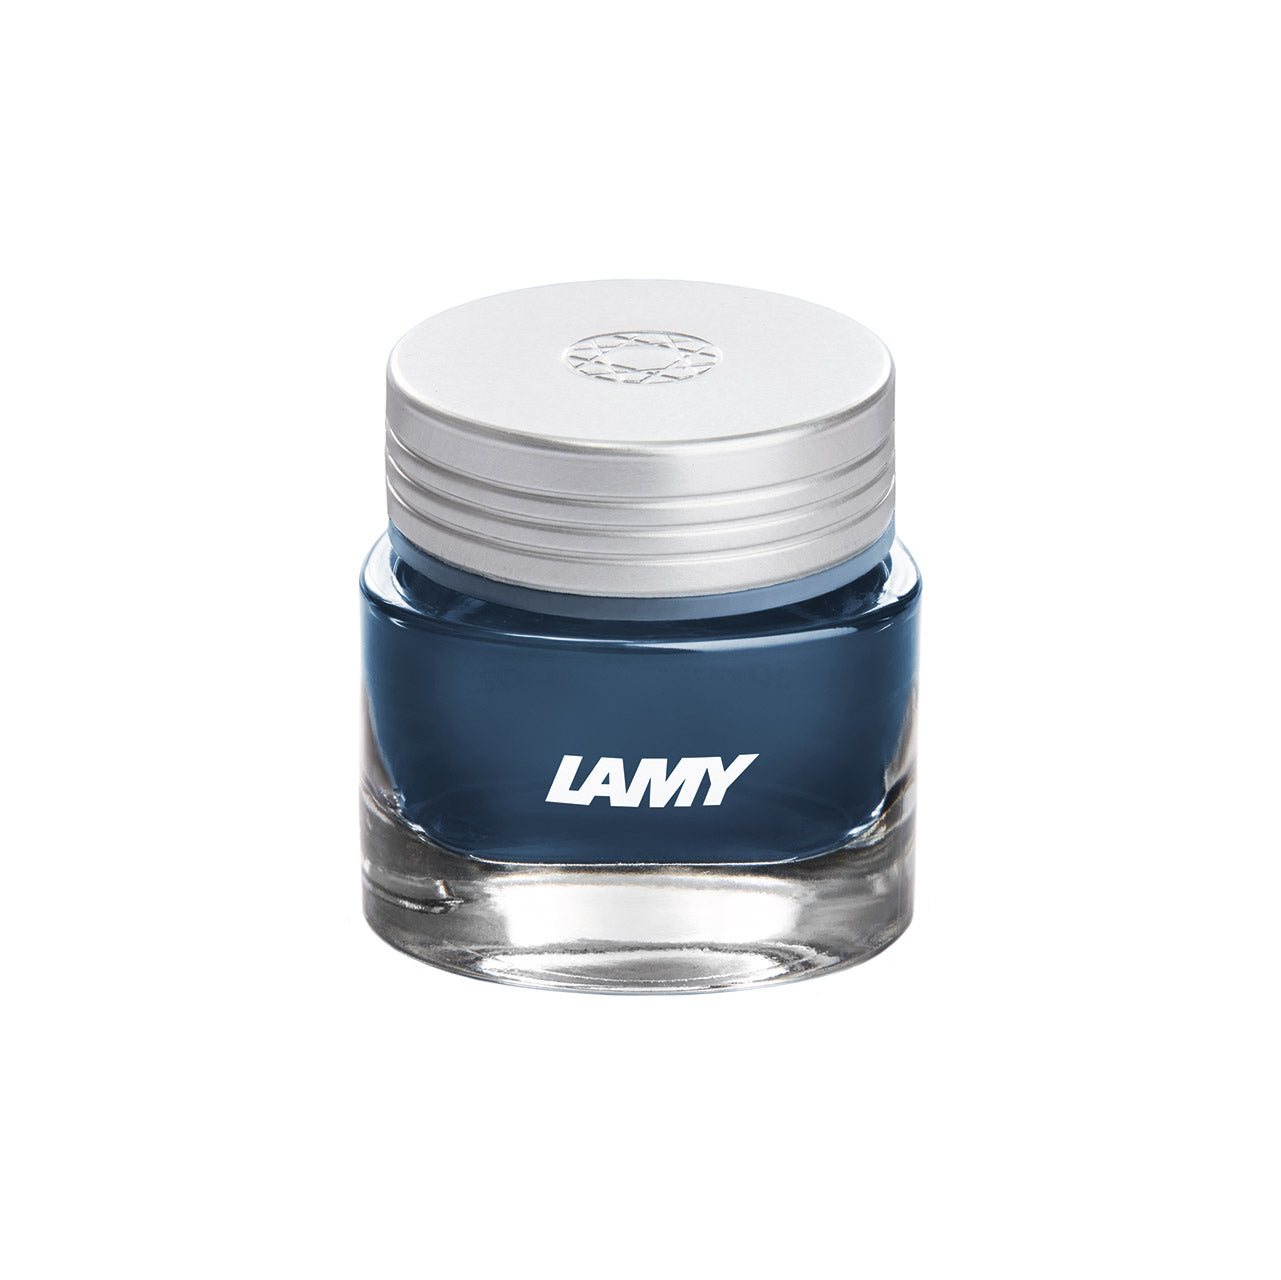 LAMY Crystal Inks T53 - Benitoite